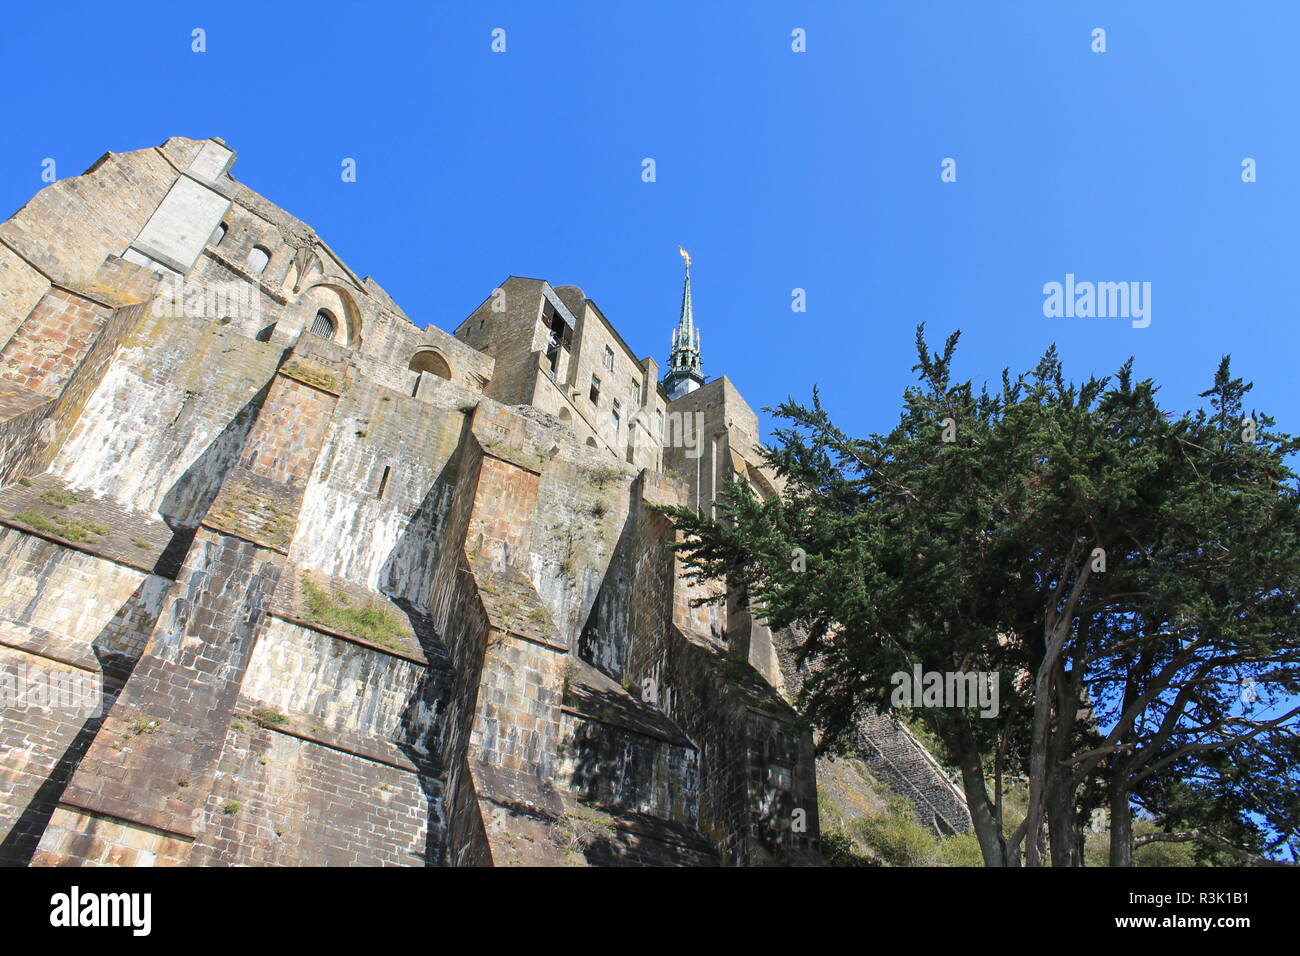 Mont Saint Michel abbey - UNESCO world heritage, Normandy, France Stock Photo